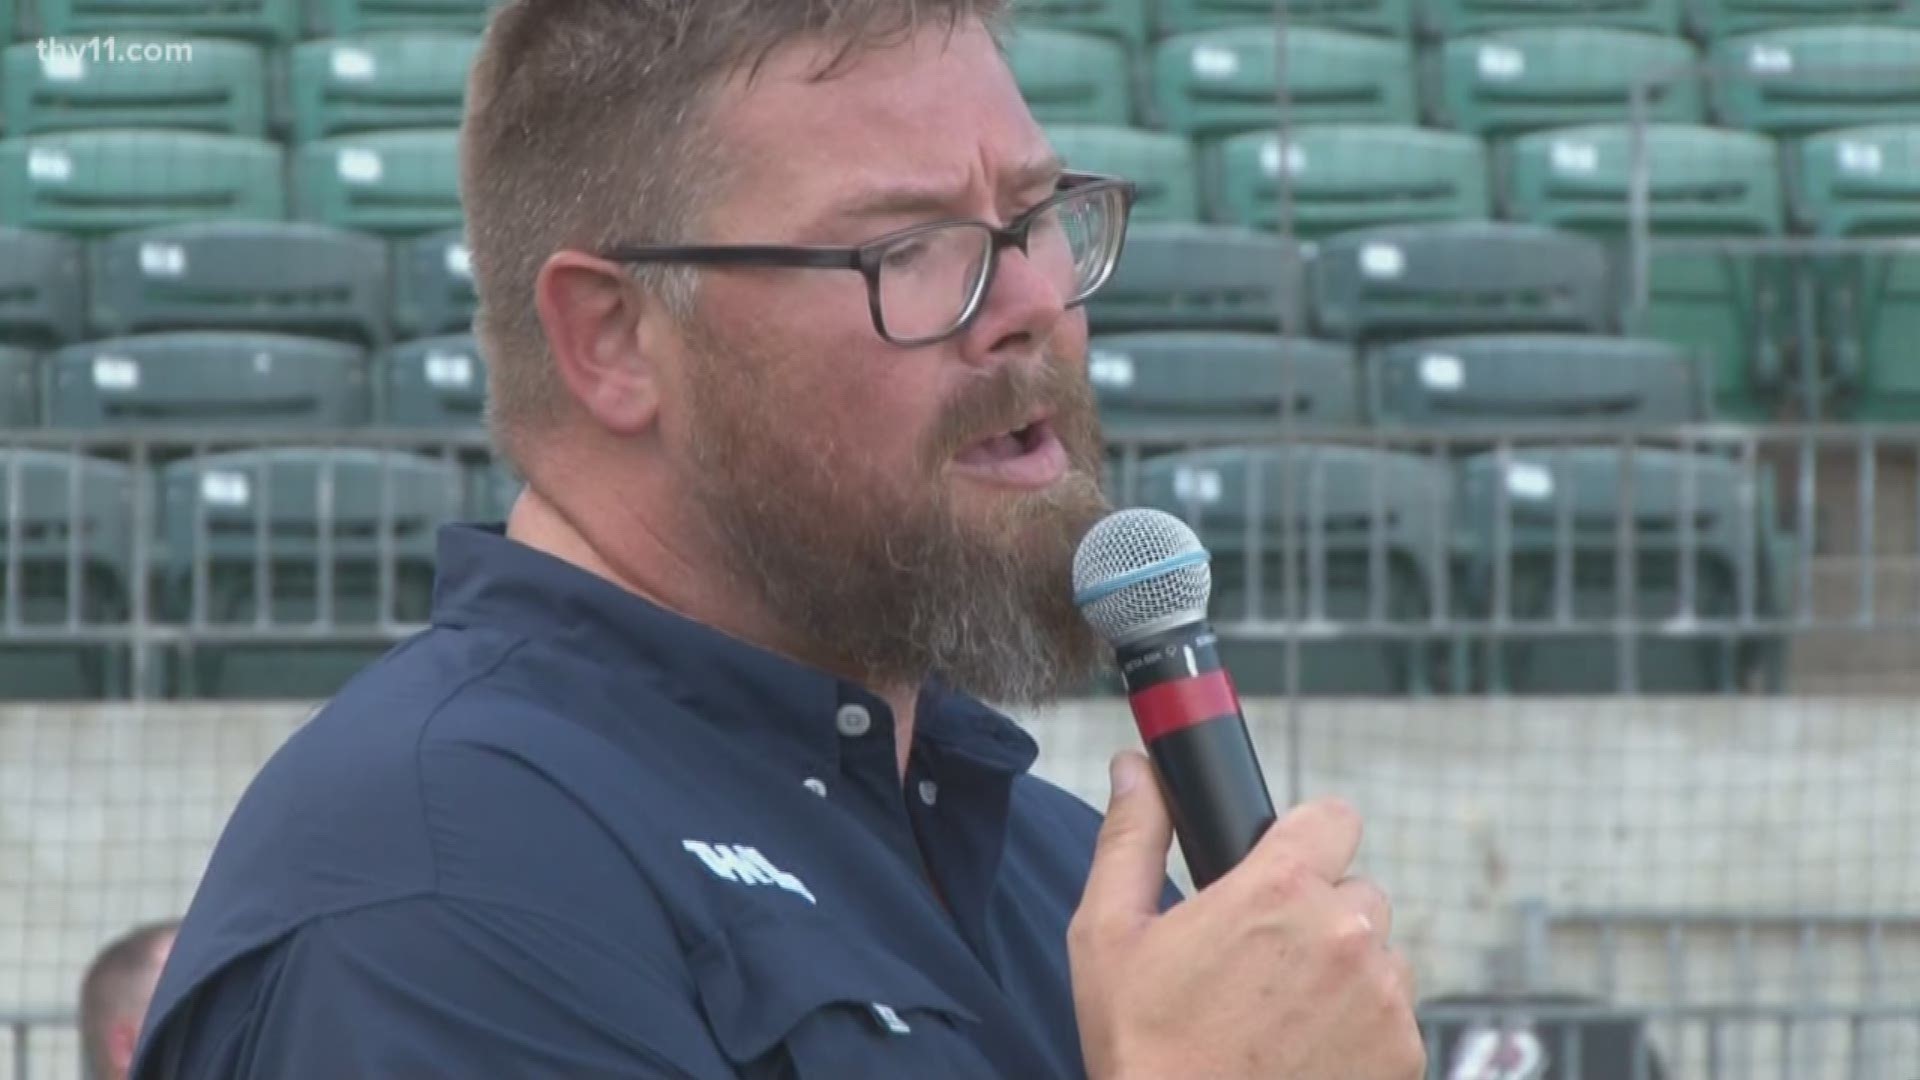 THV11's very own Adam Bledsoe sings the National Anthem at the Arkansas Traveler's game!